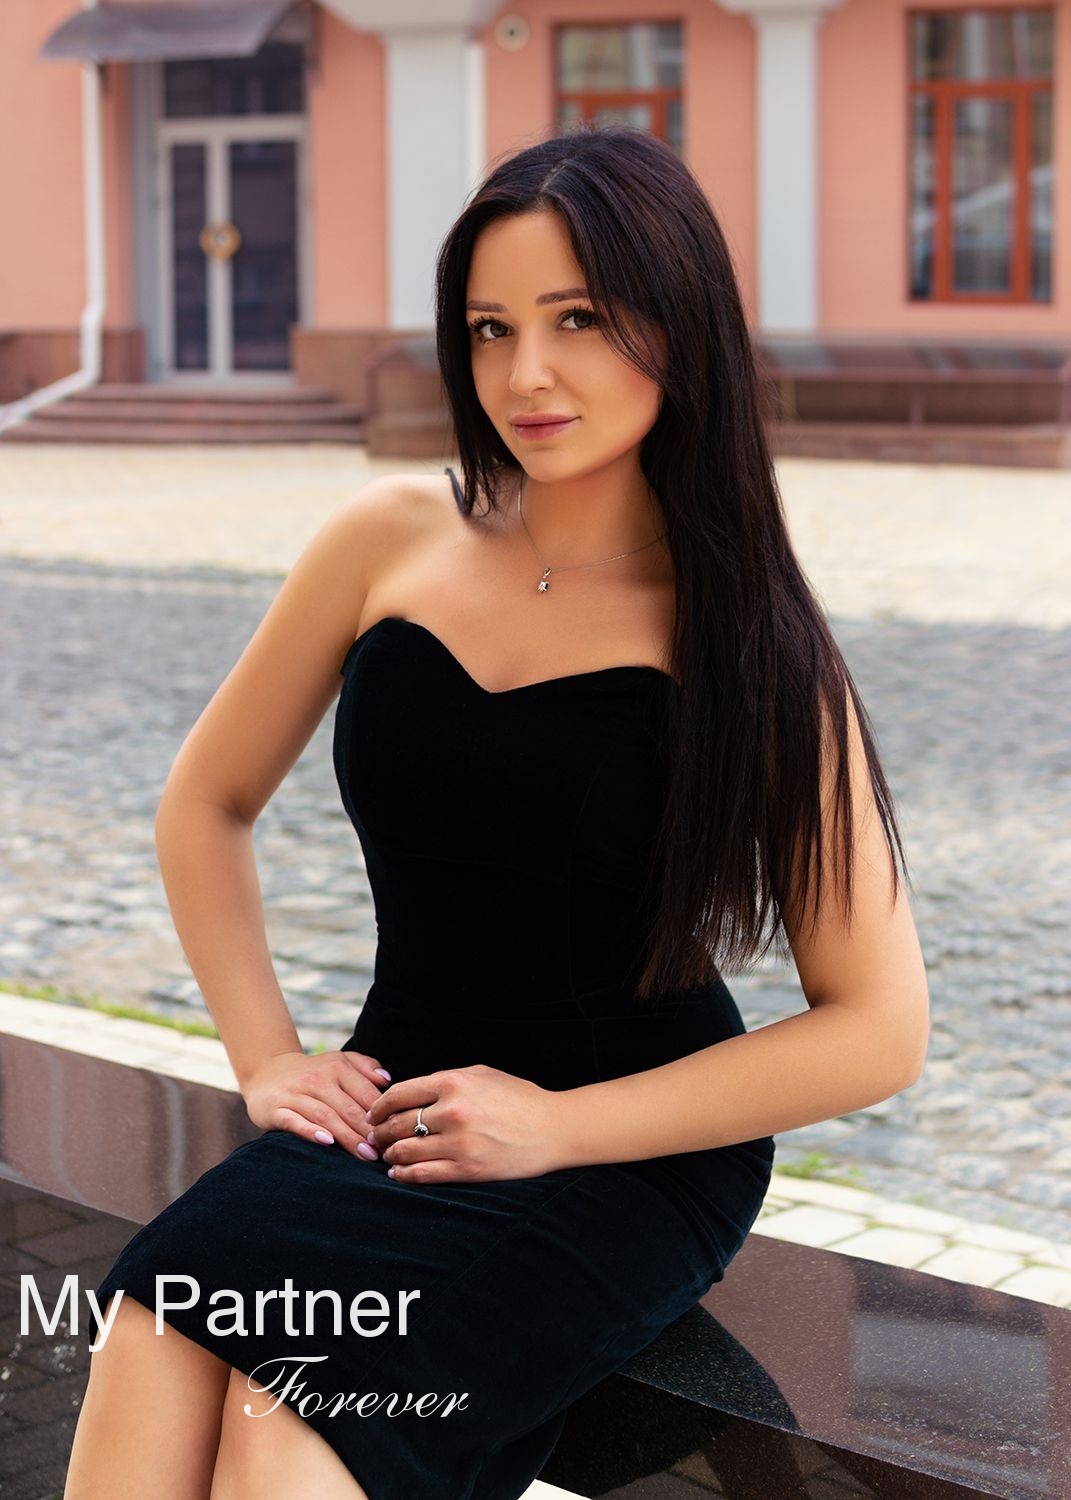 Dating Service to Meet Pretty Ukrainian Lady Polina from Kiev, Ukraine